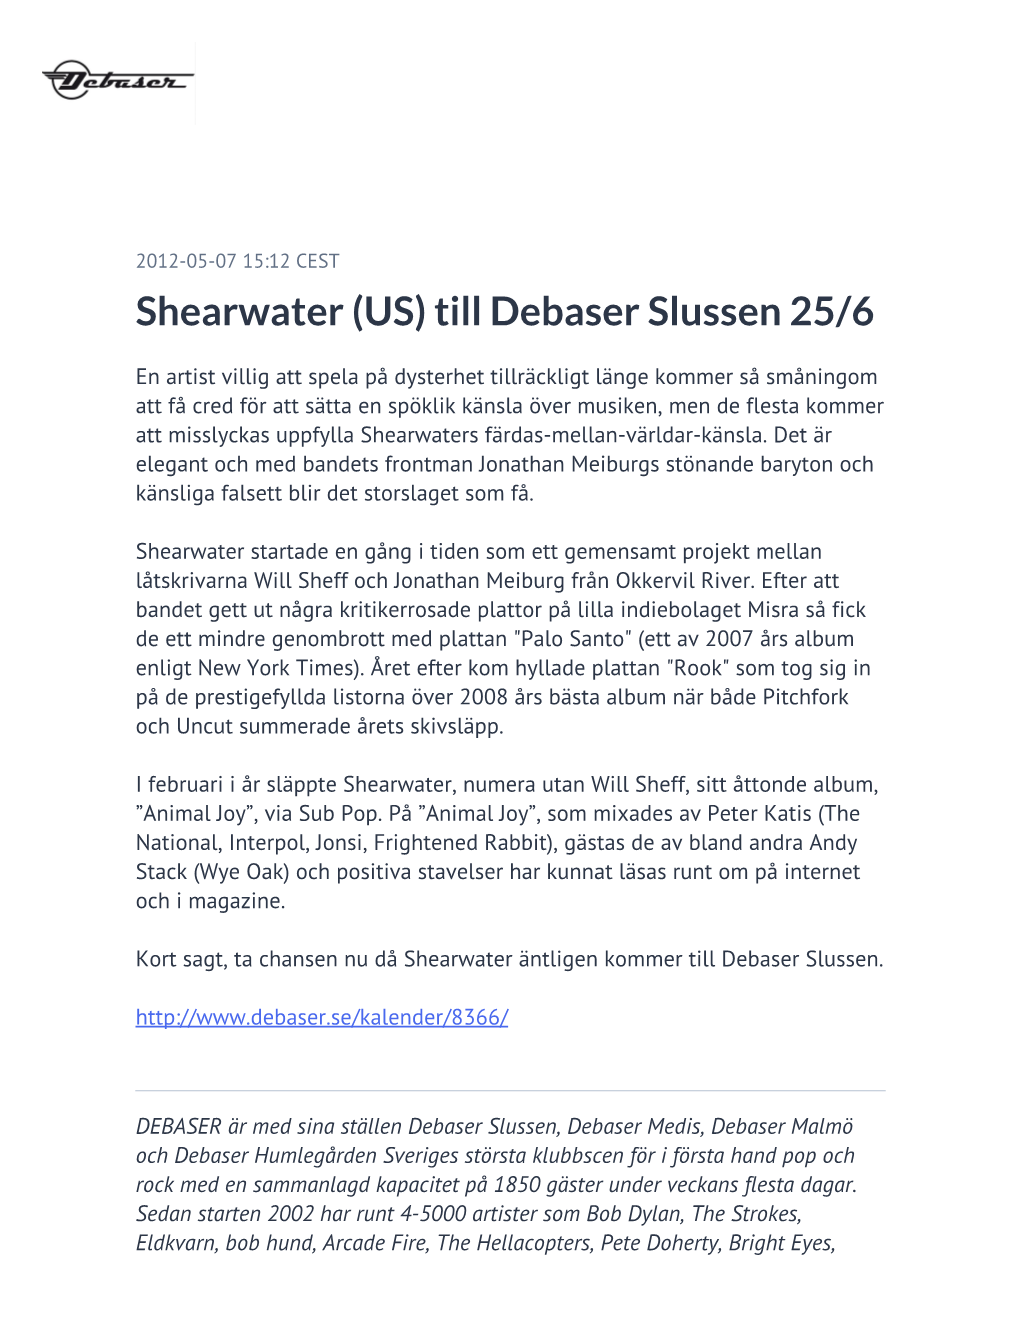 Shearwater (US) Till Debaser Slussen 25/6